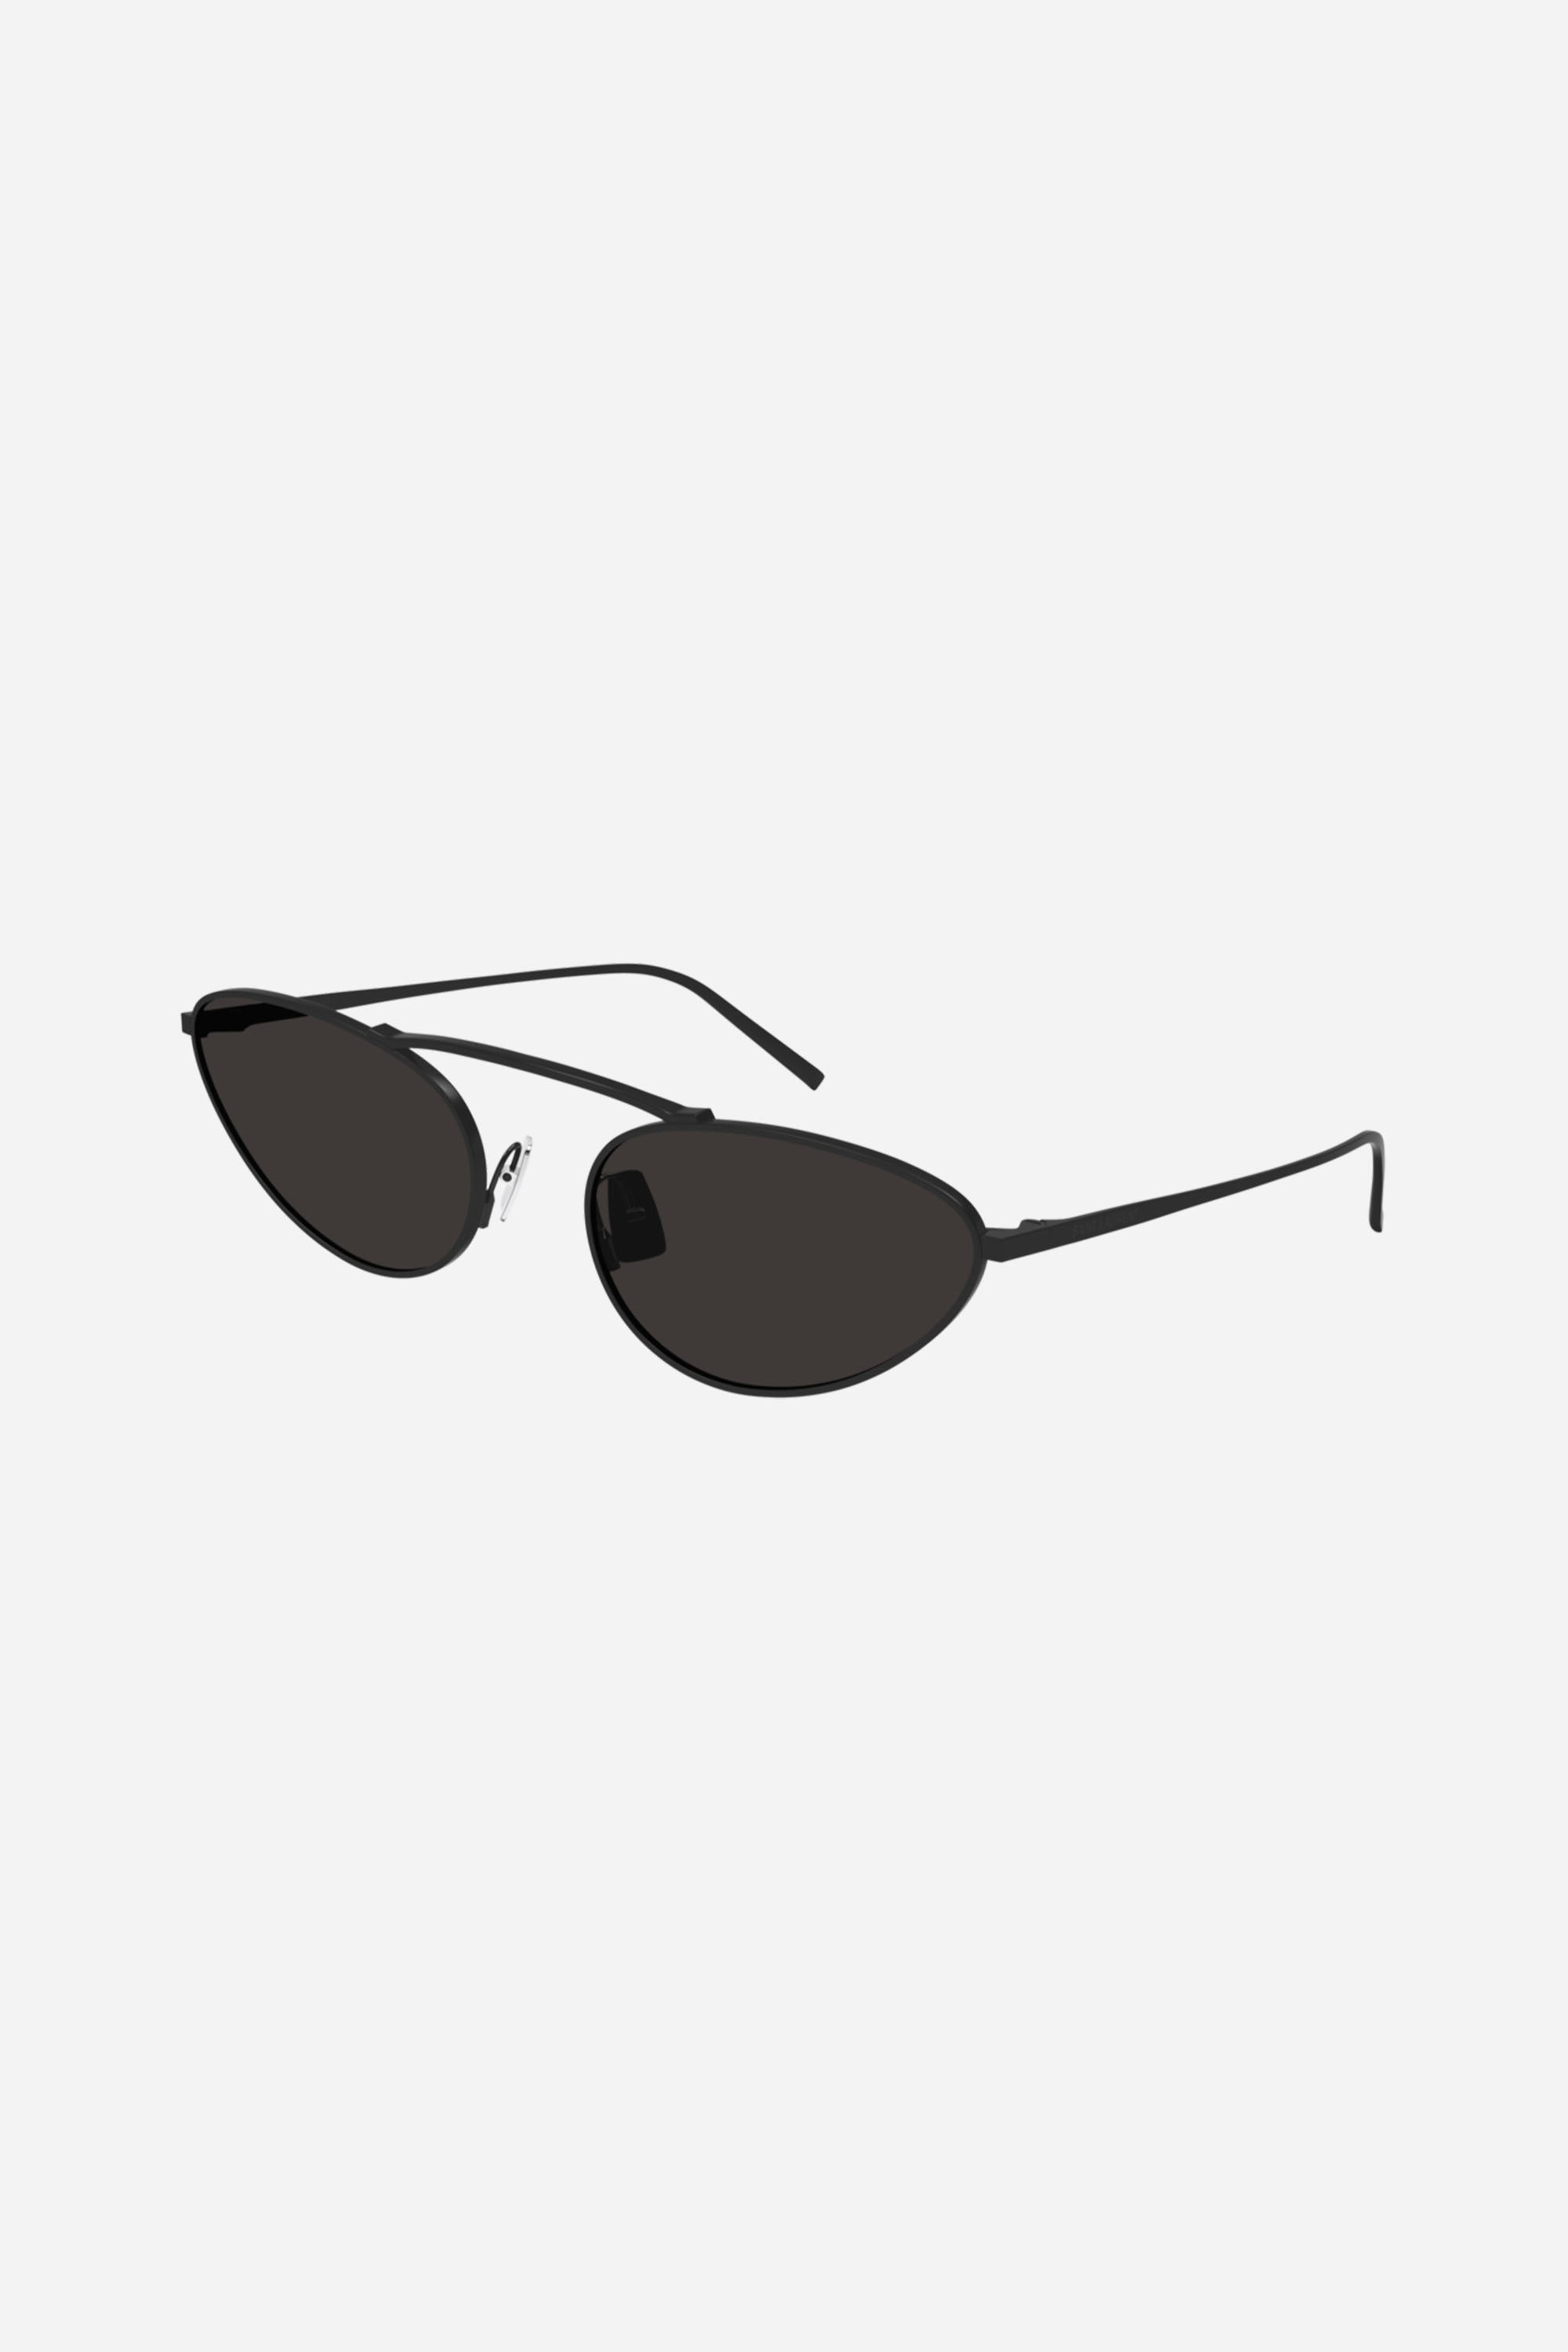 Saint Laurent oval cat eye metal sunglasses - Eyewear Club